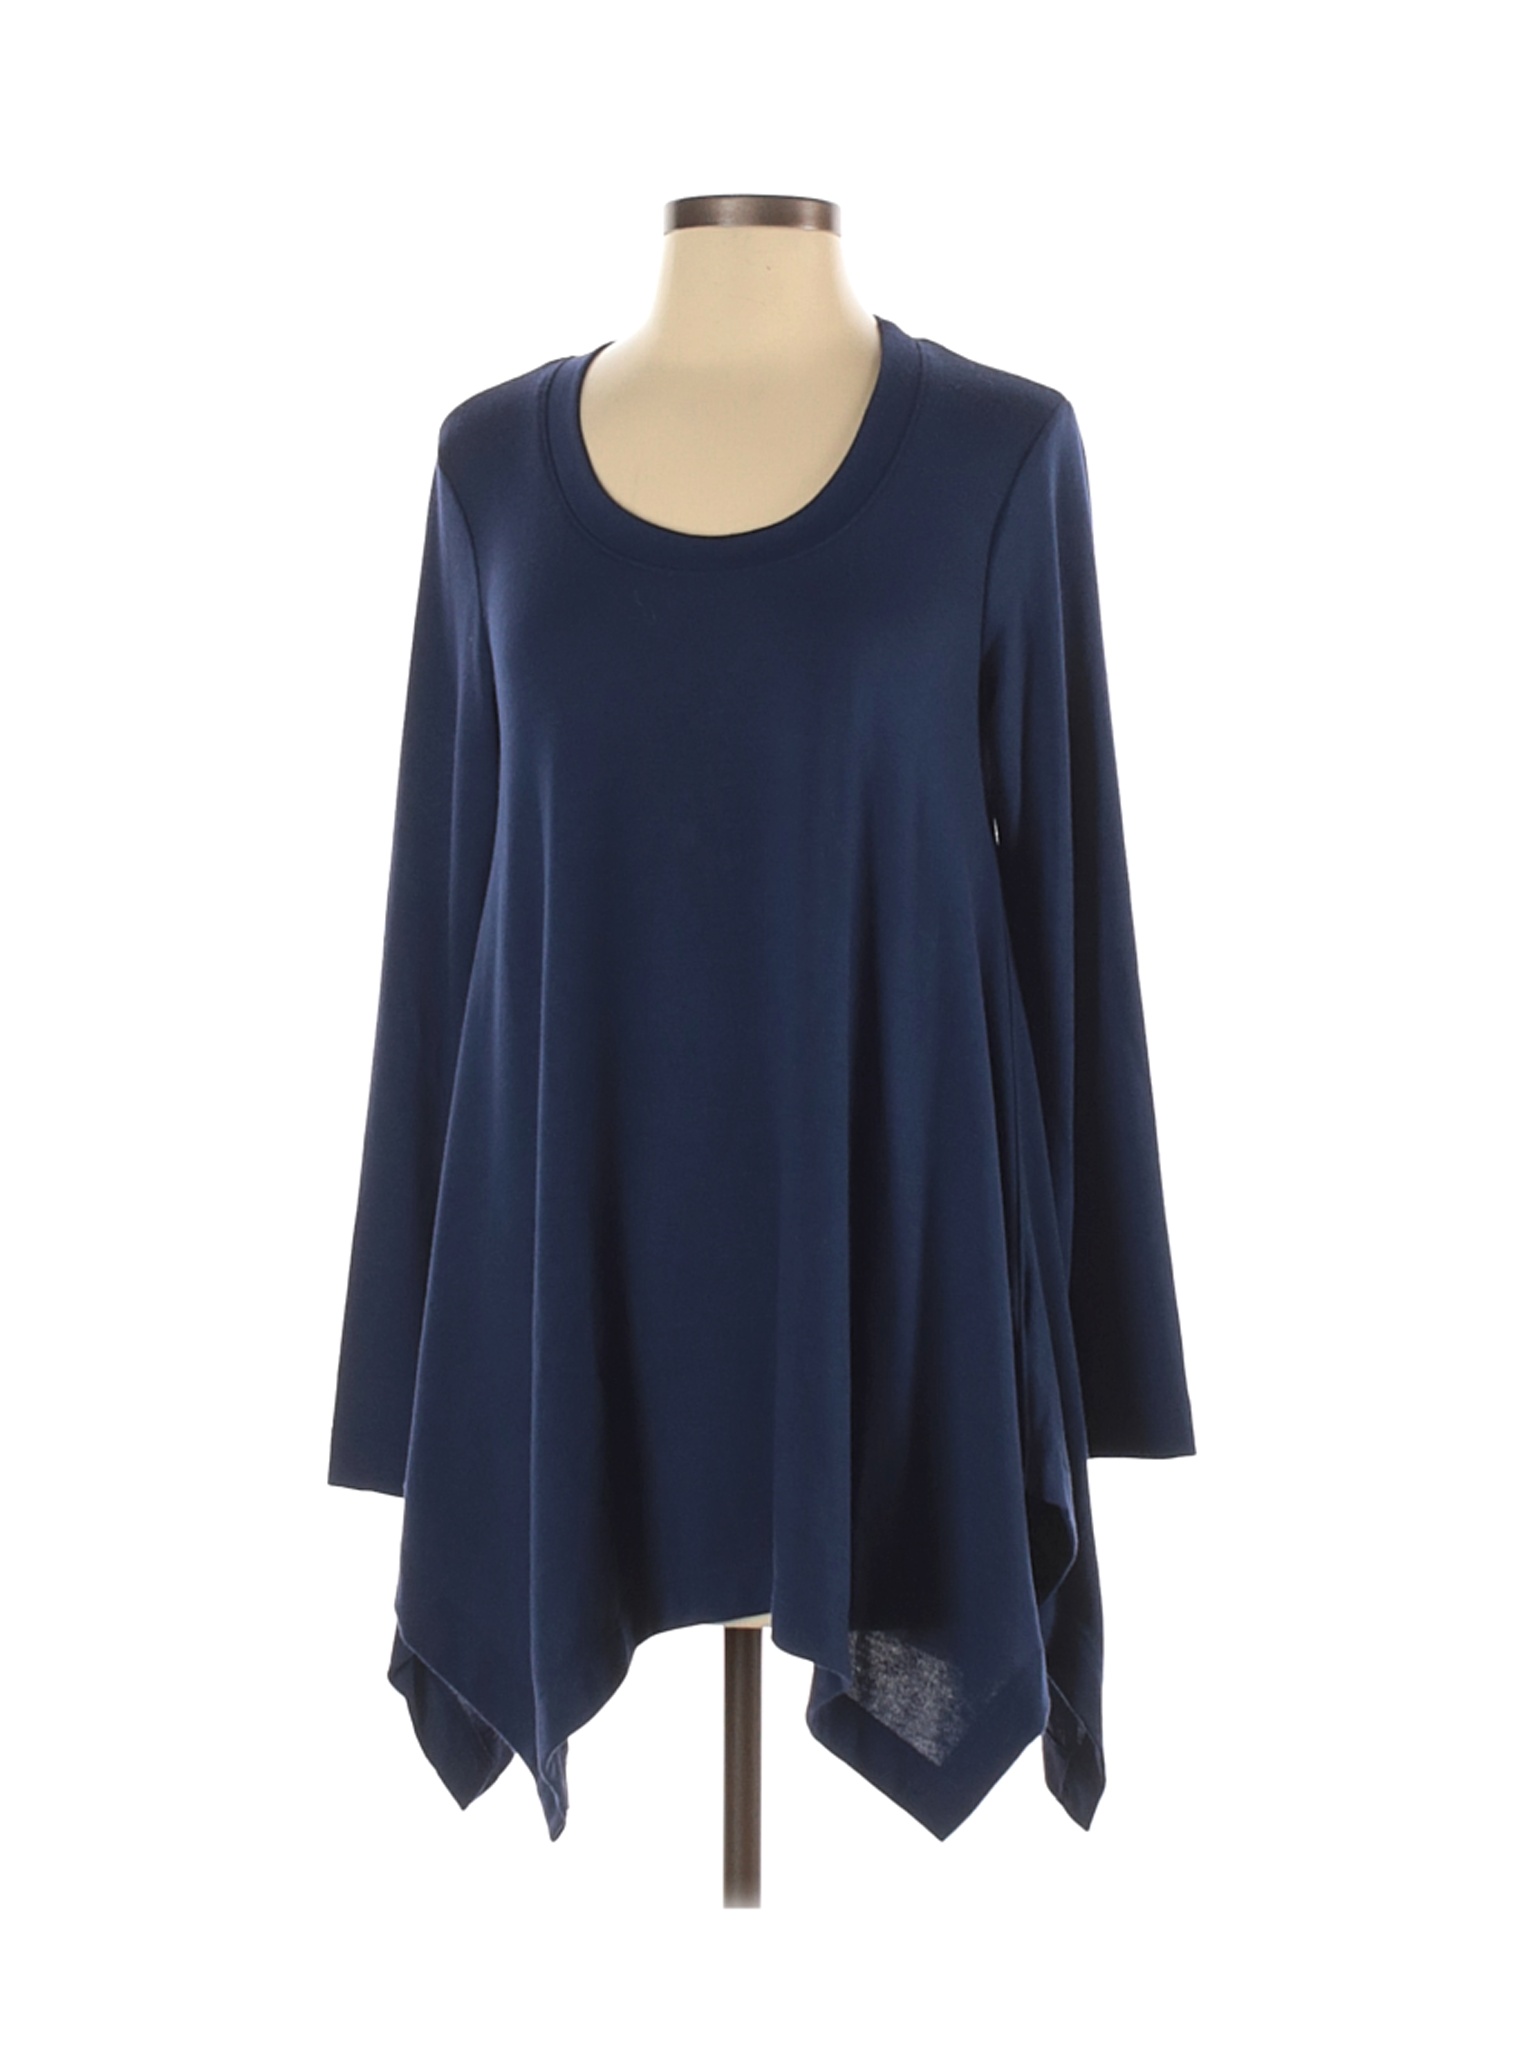 Soft Surroundings Women Blue Long Sleeve T-Shirt S | eBay